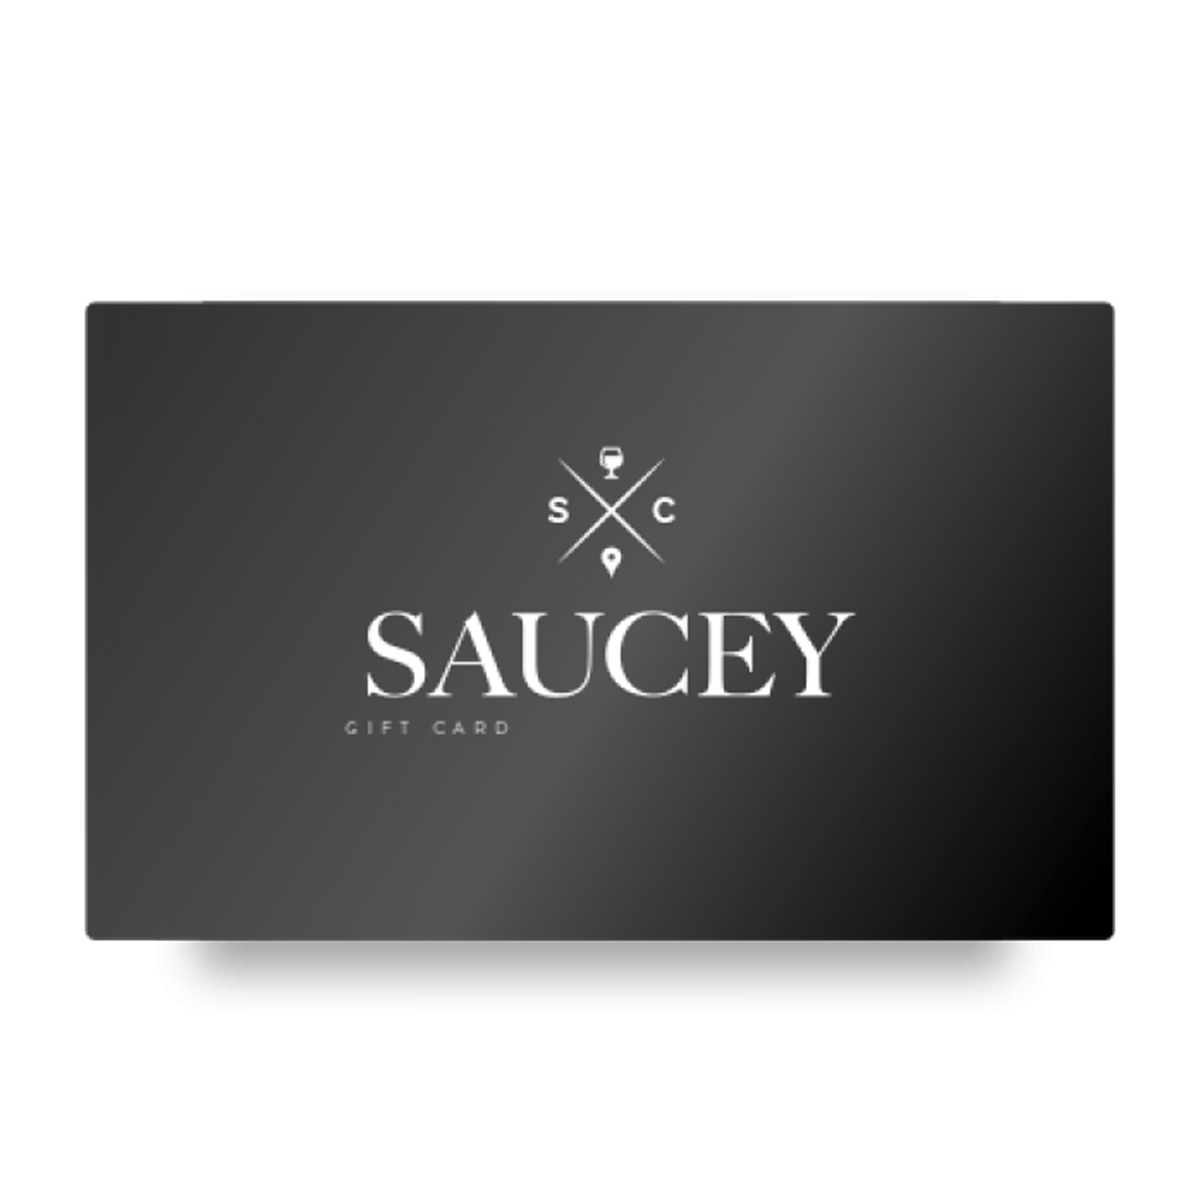 Saucey Gift Card